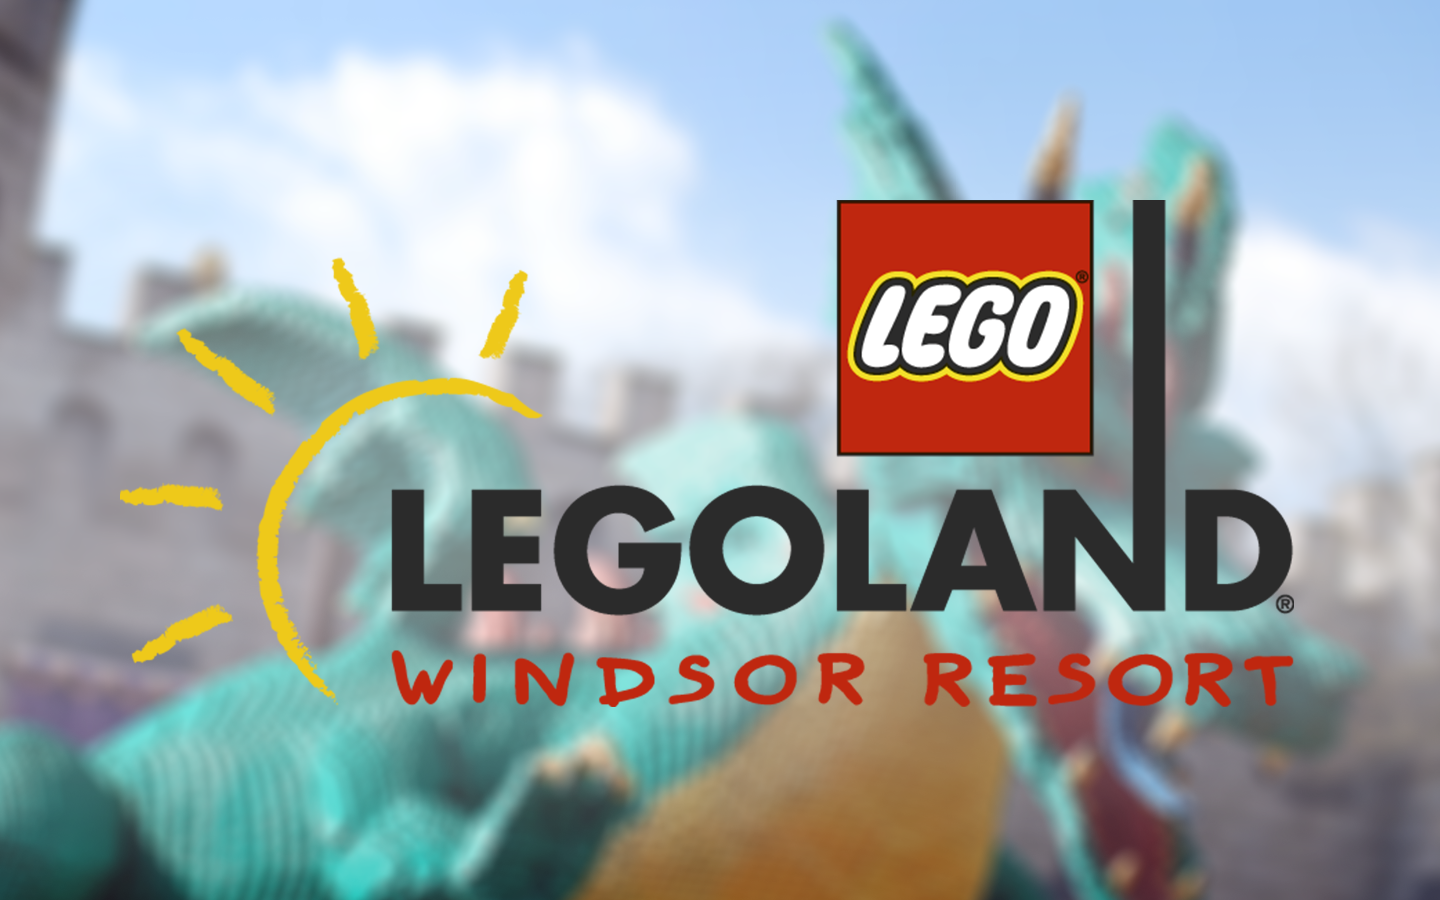 Blurred image of Dragon Coaster superimposed with LEGOLAND Windsor Resort logo.